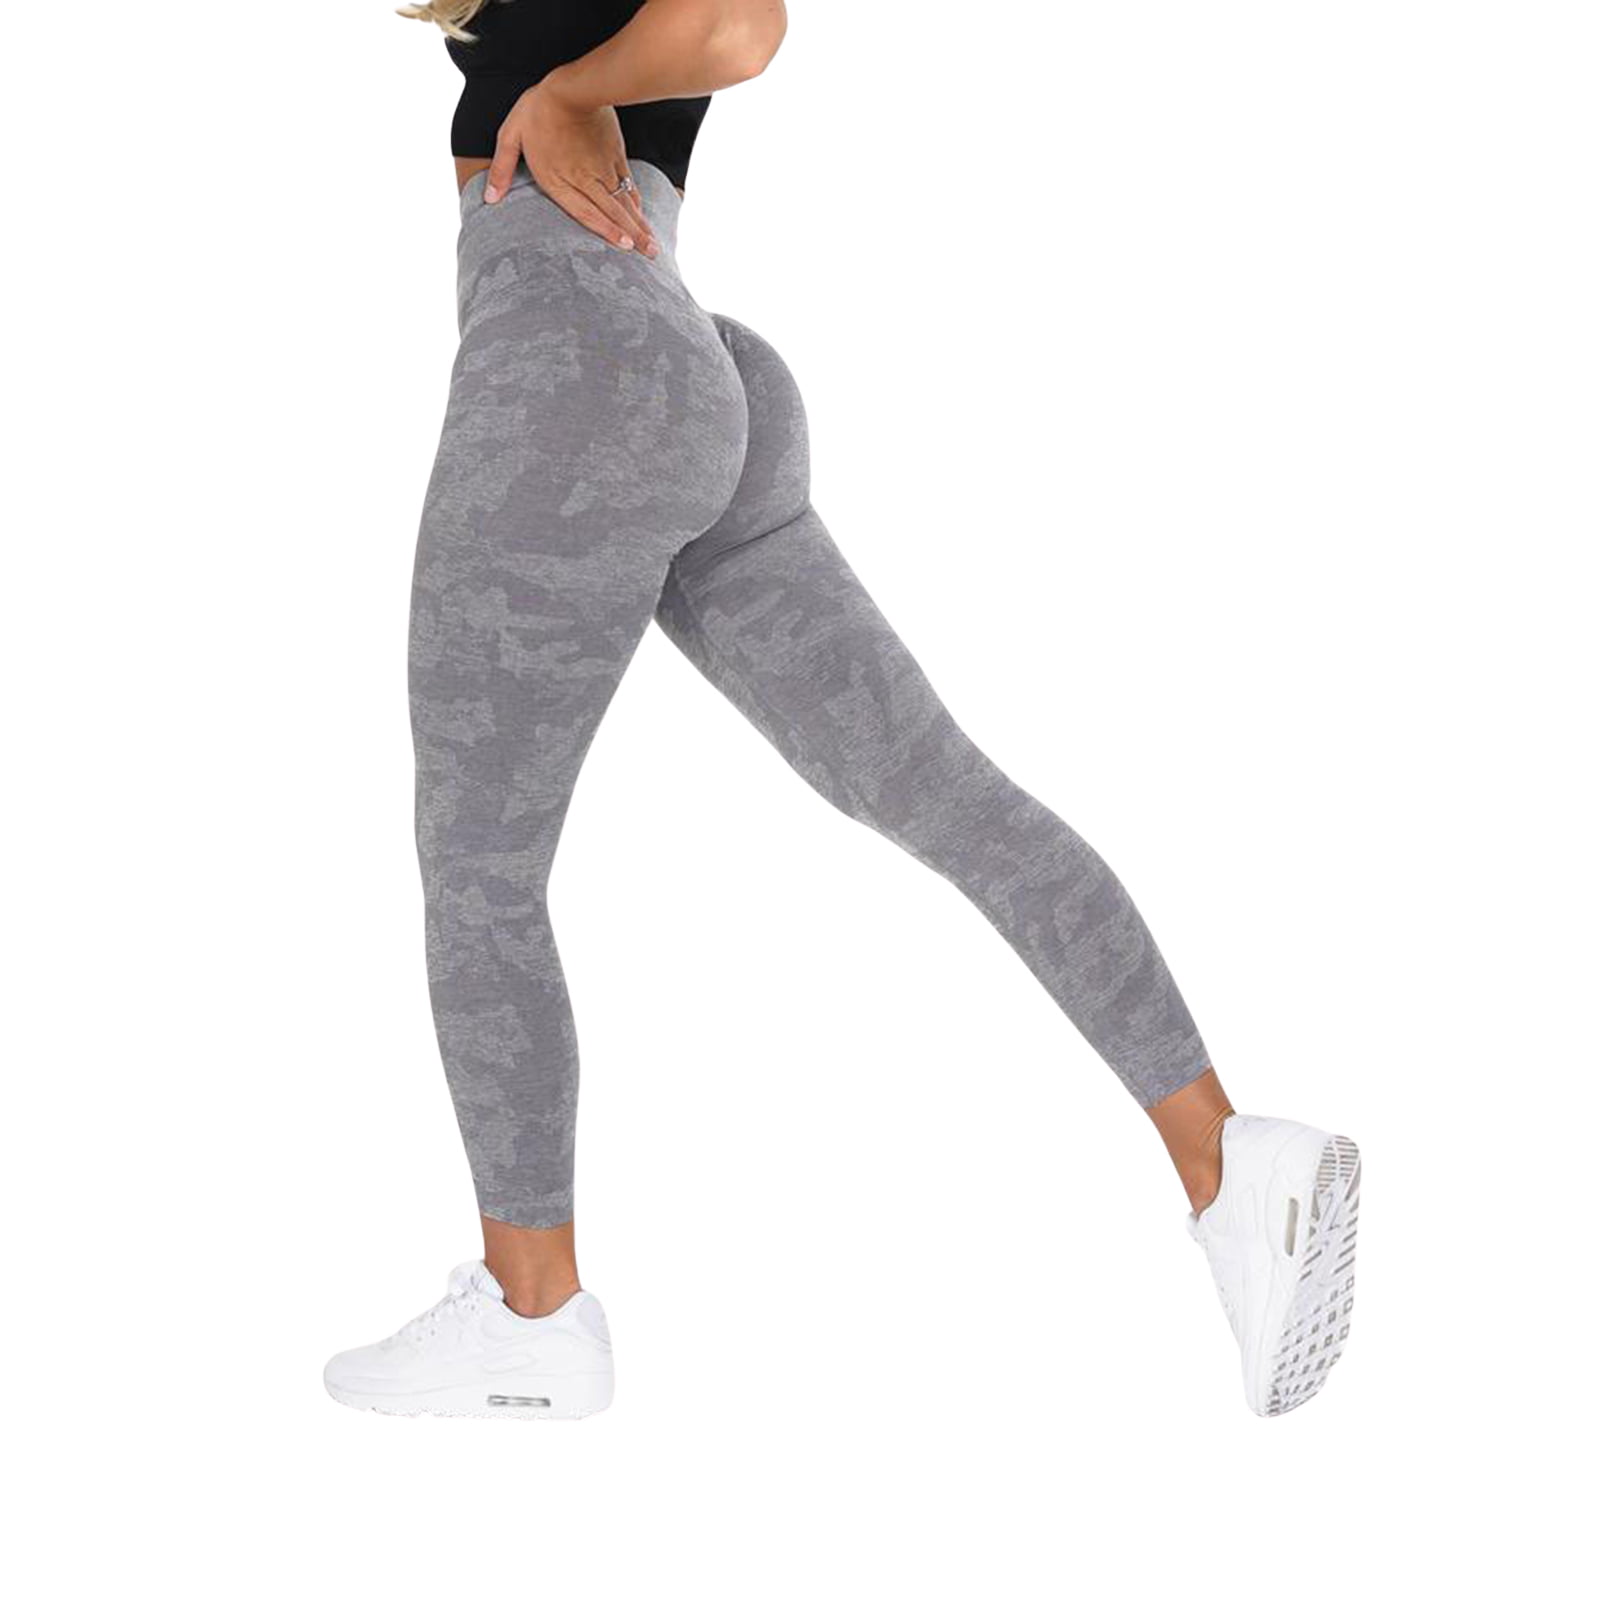 Details about   XS Light Gray High Waist Yoga Pants w/ Pockets Workout Running Fitness for Women 